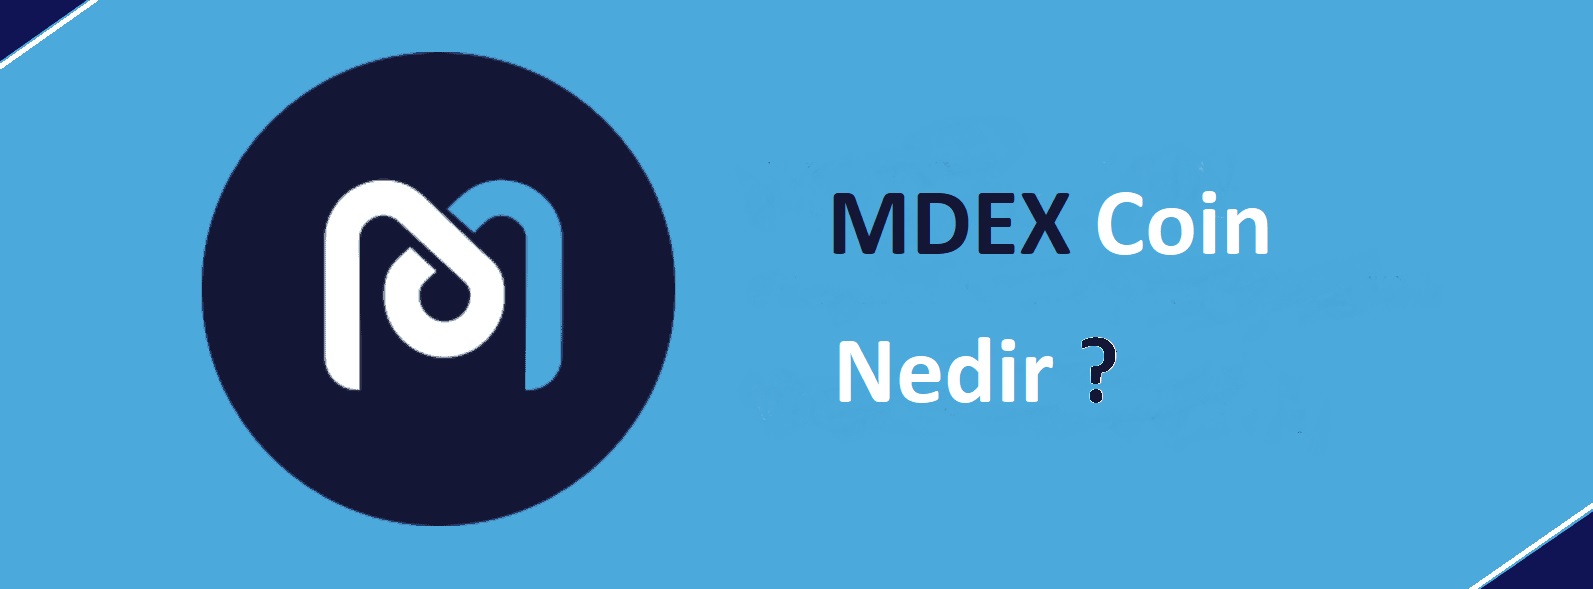 mdex coin nedir